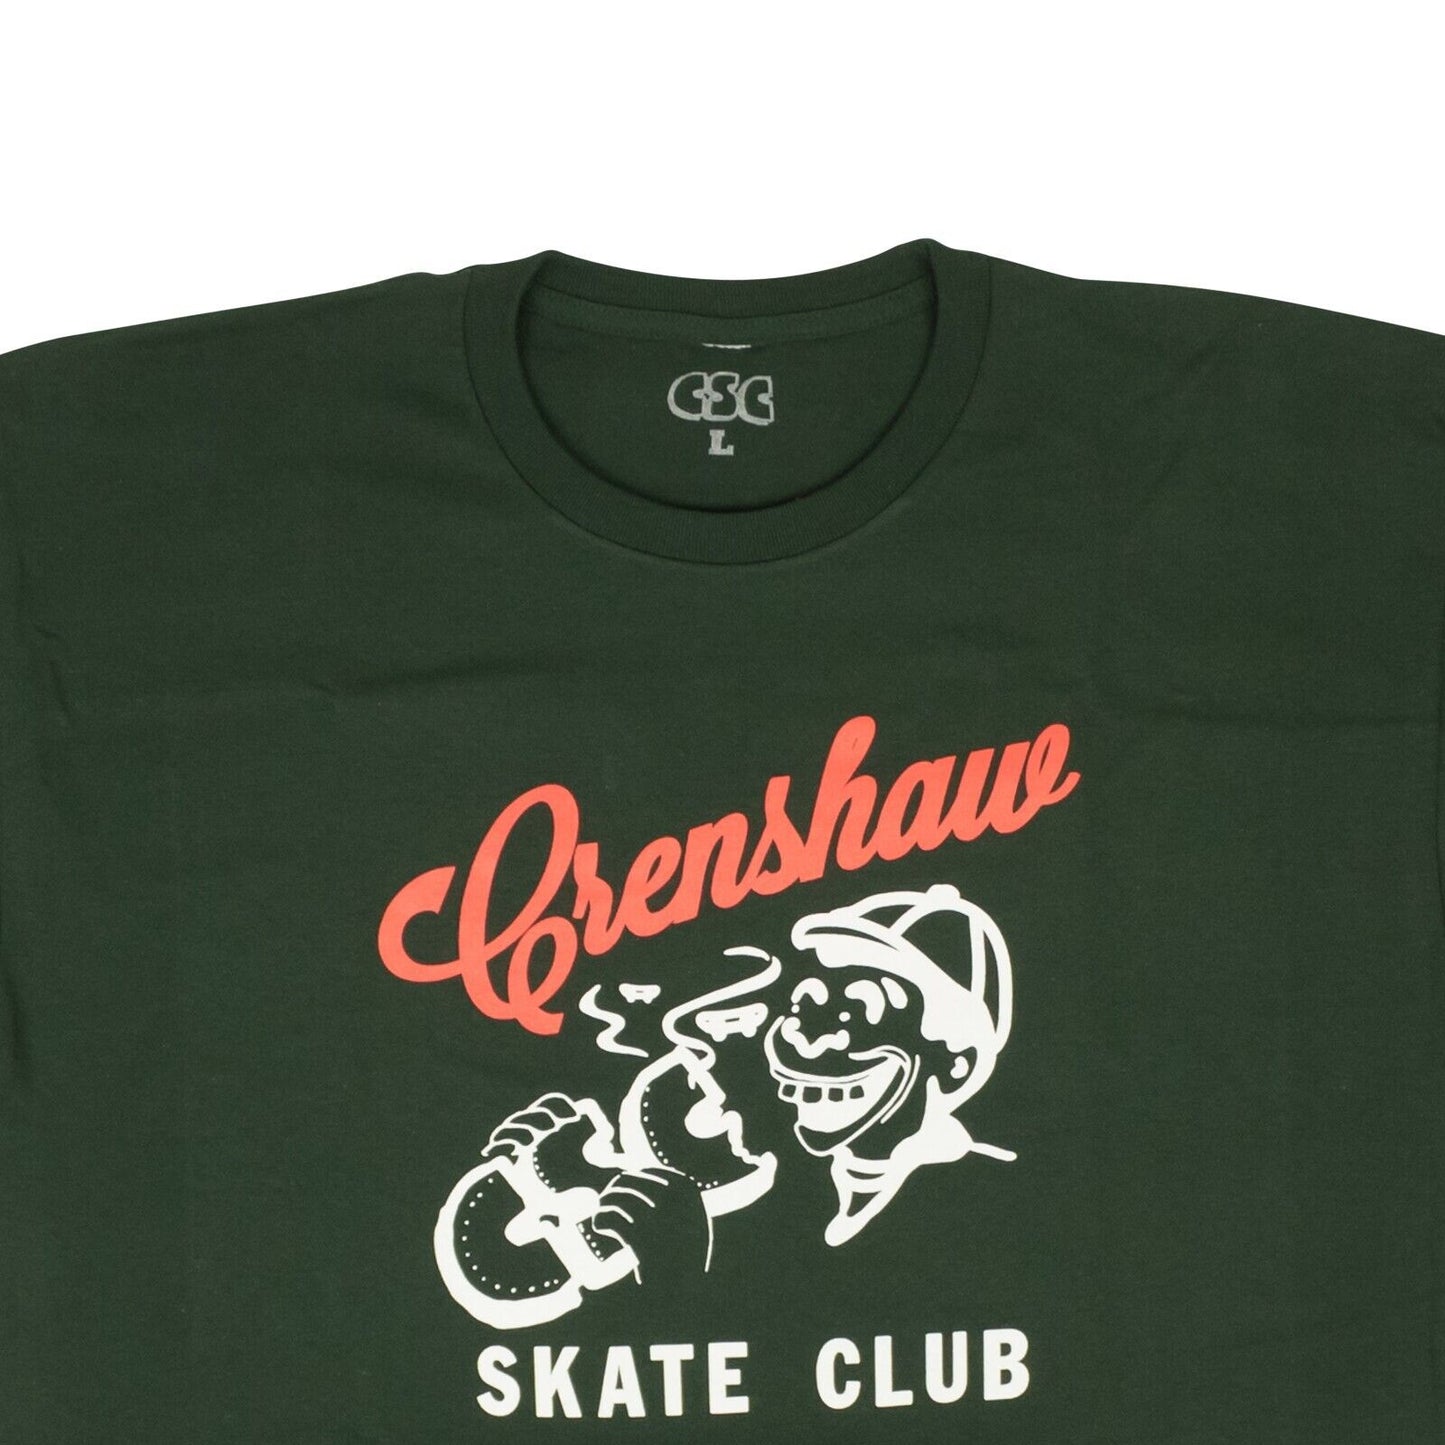 Complexcon Crenshaw Skate Club Tee - Green